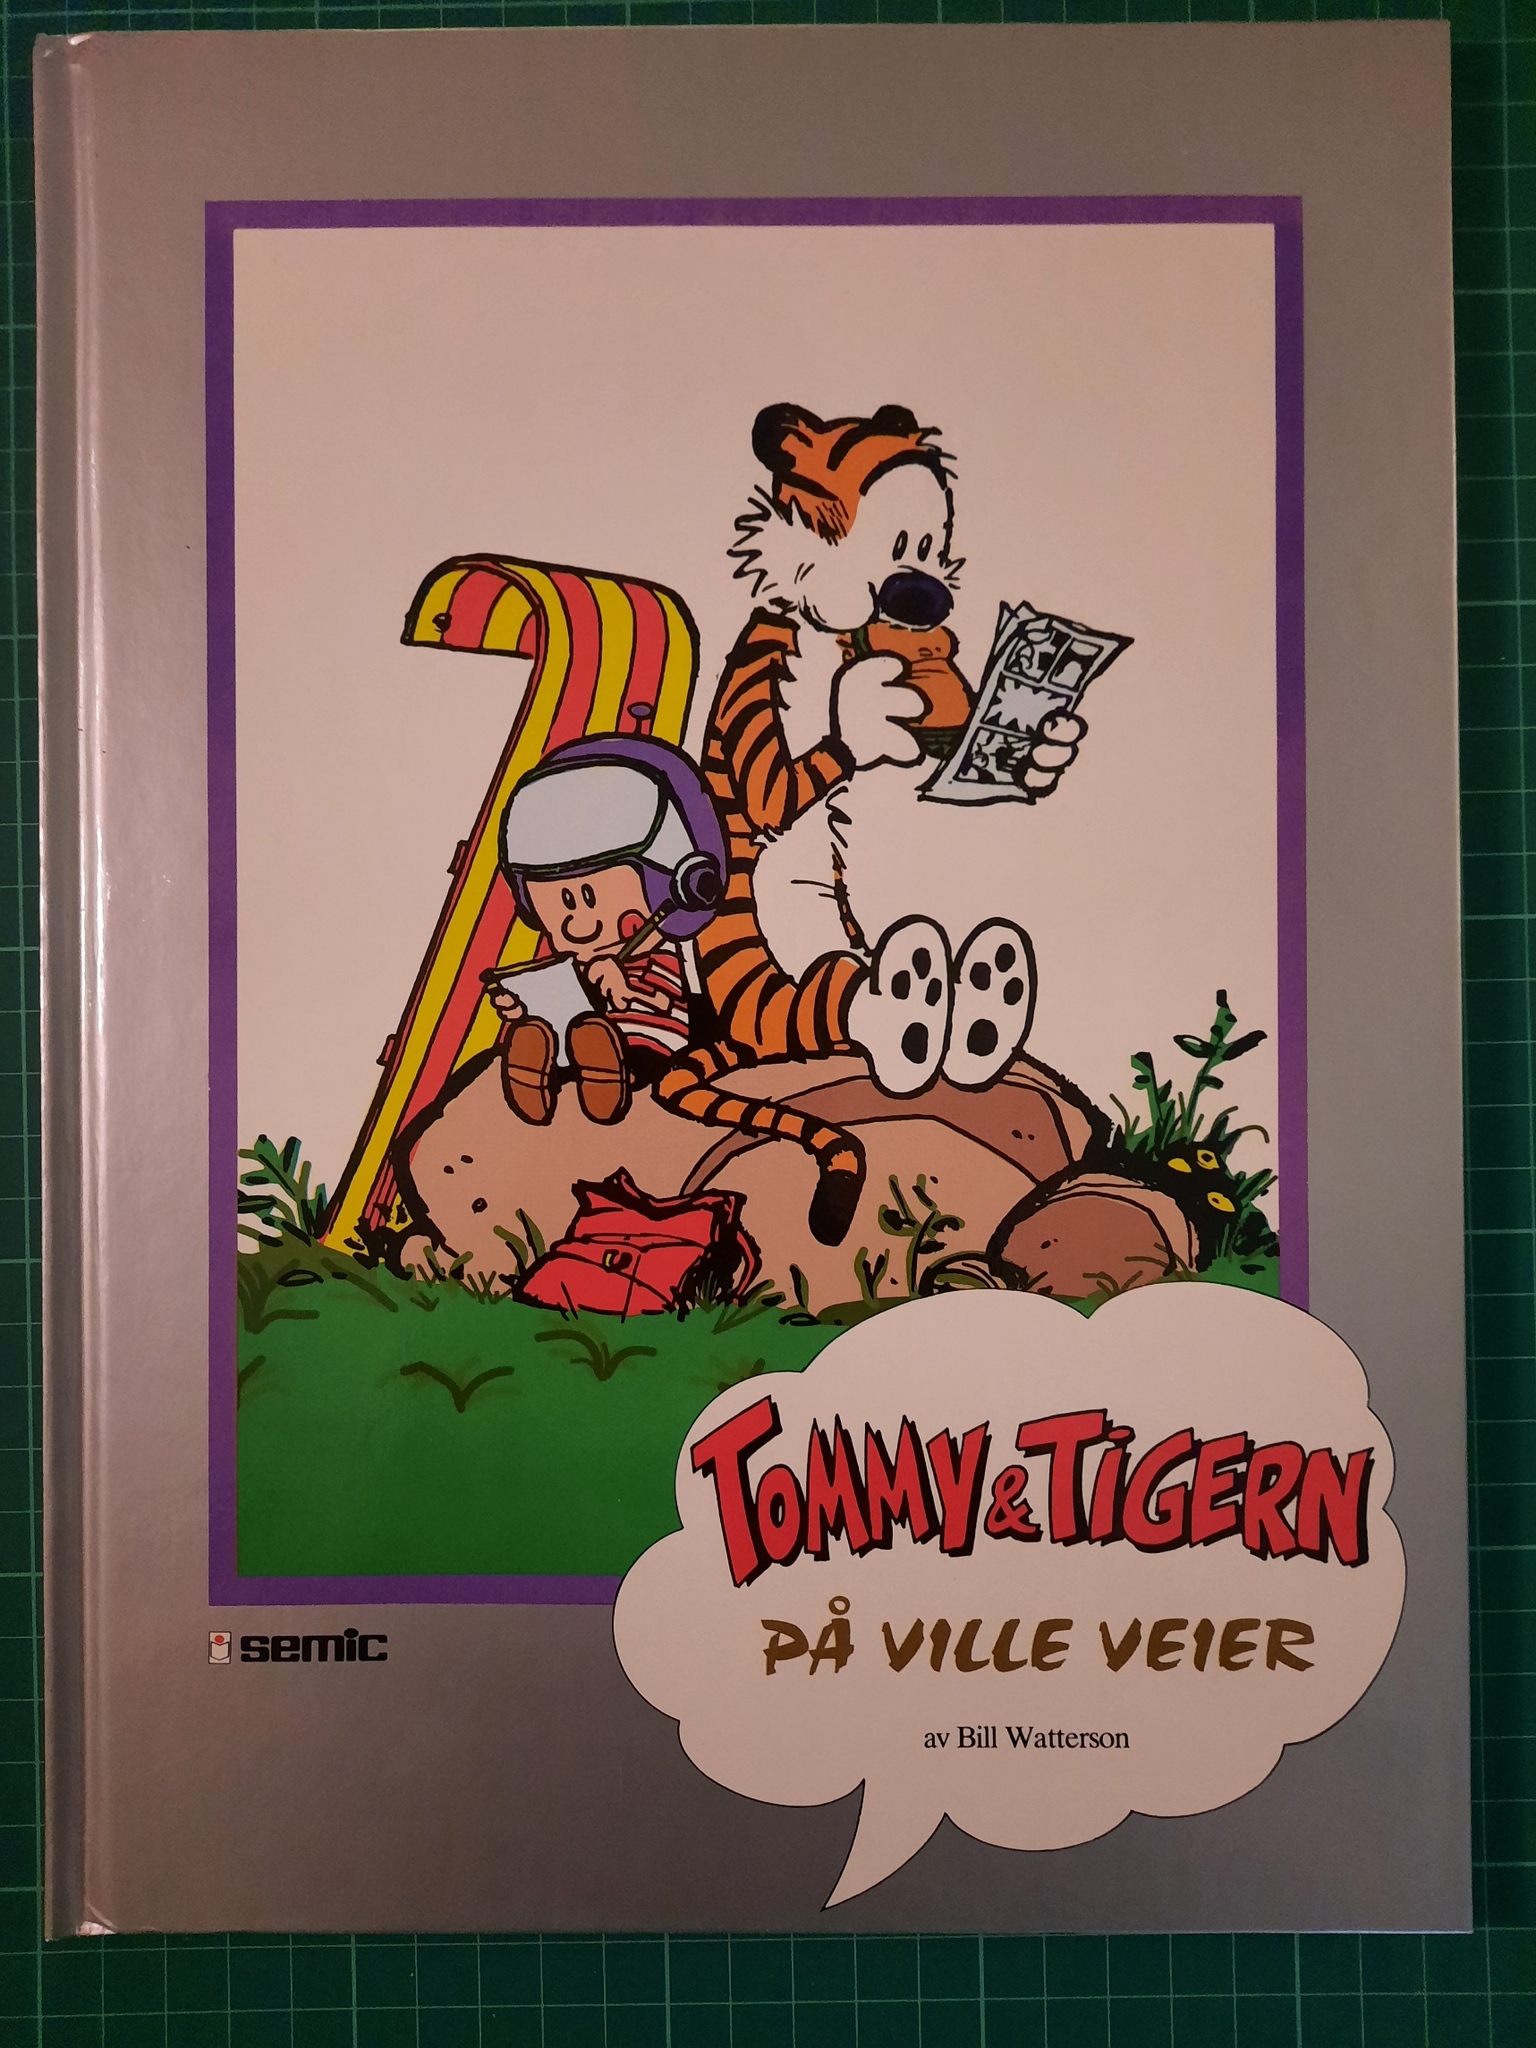 Tommy & Tigern - På ville veier